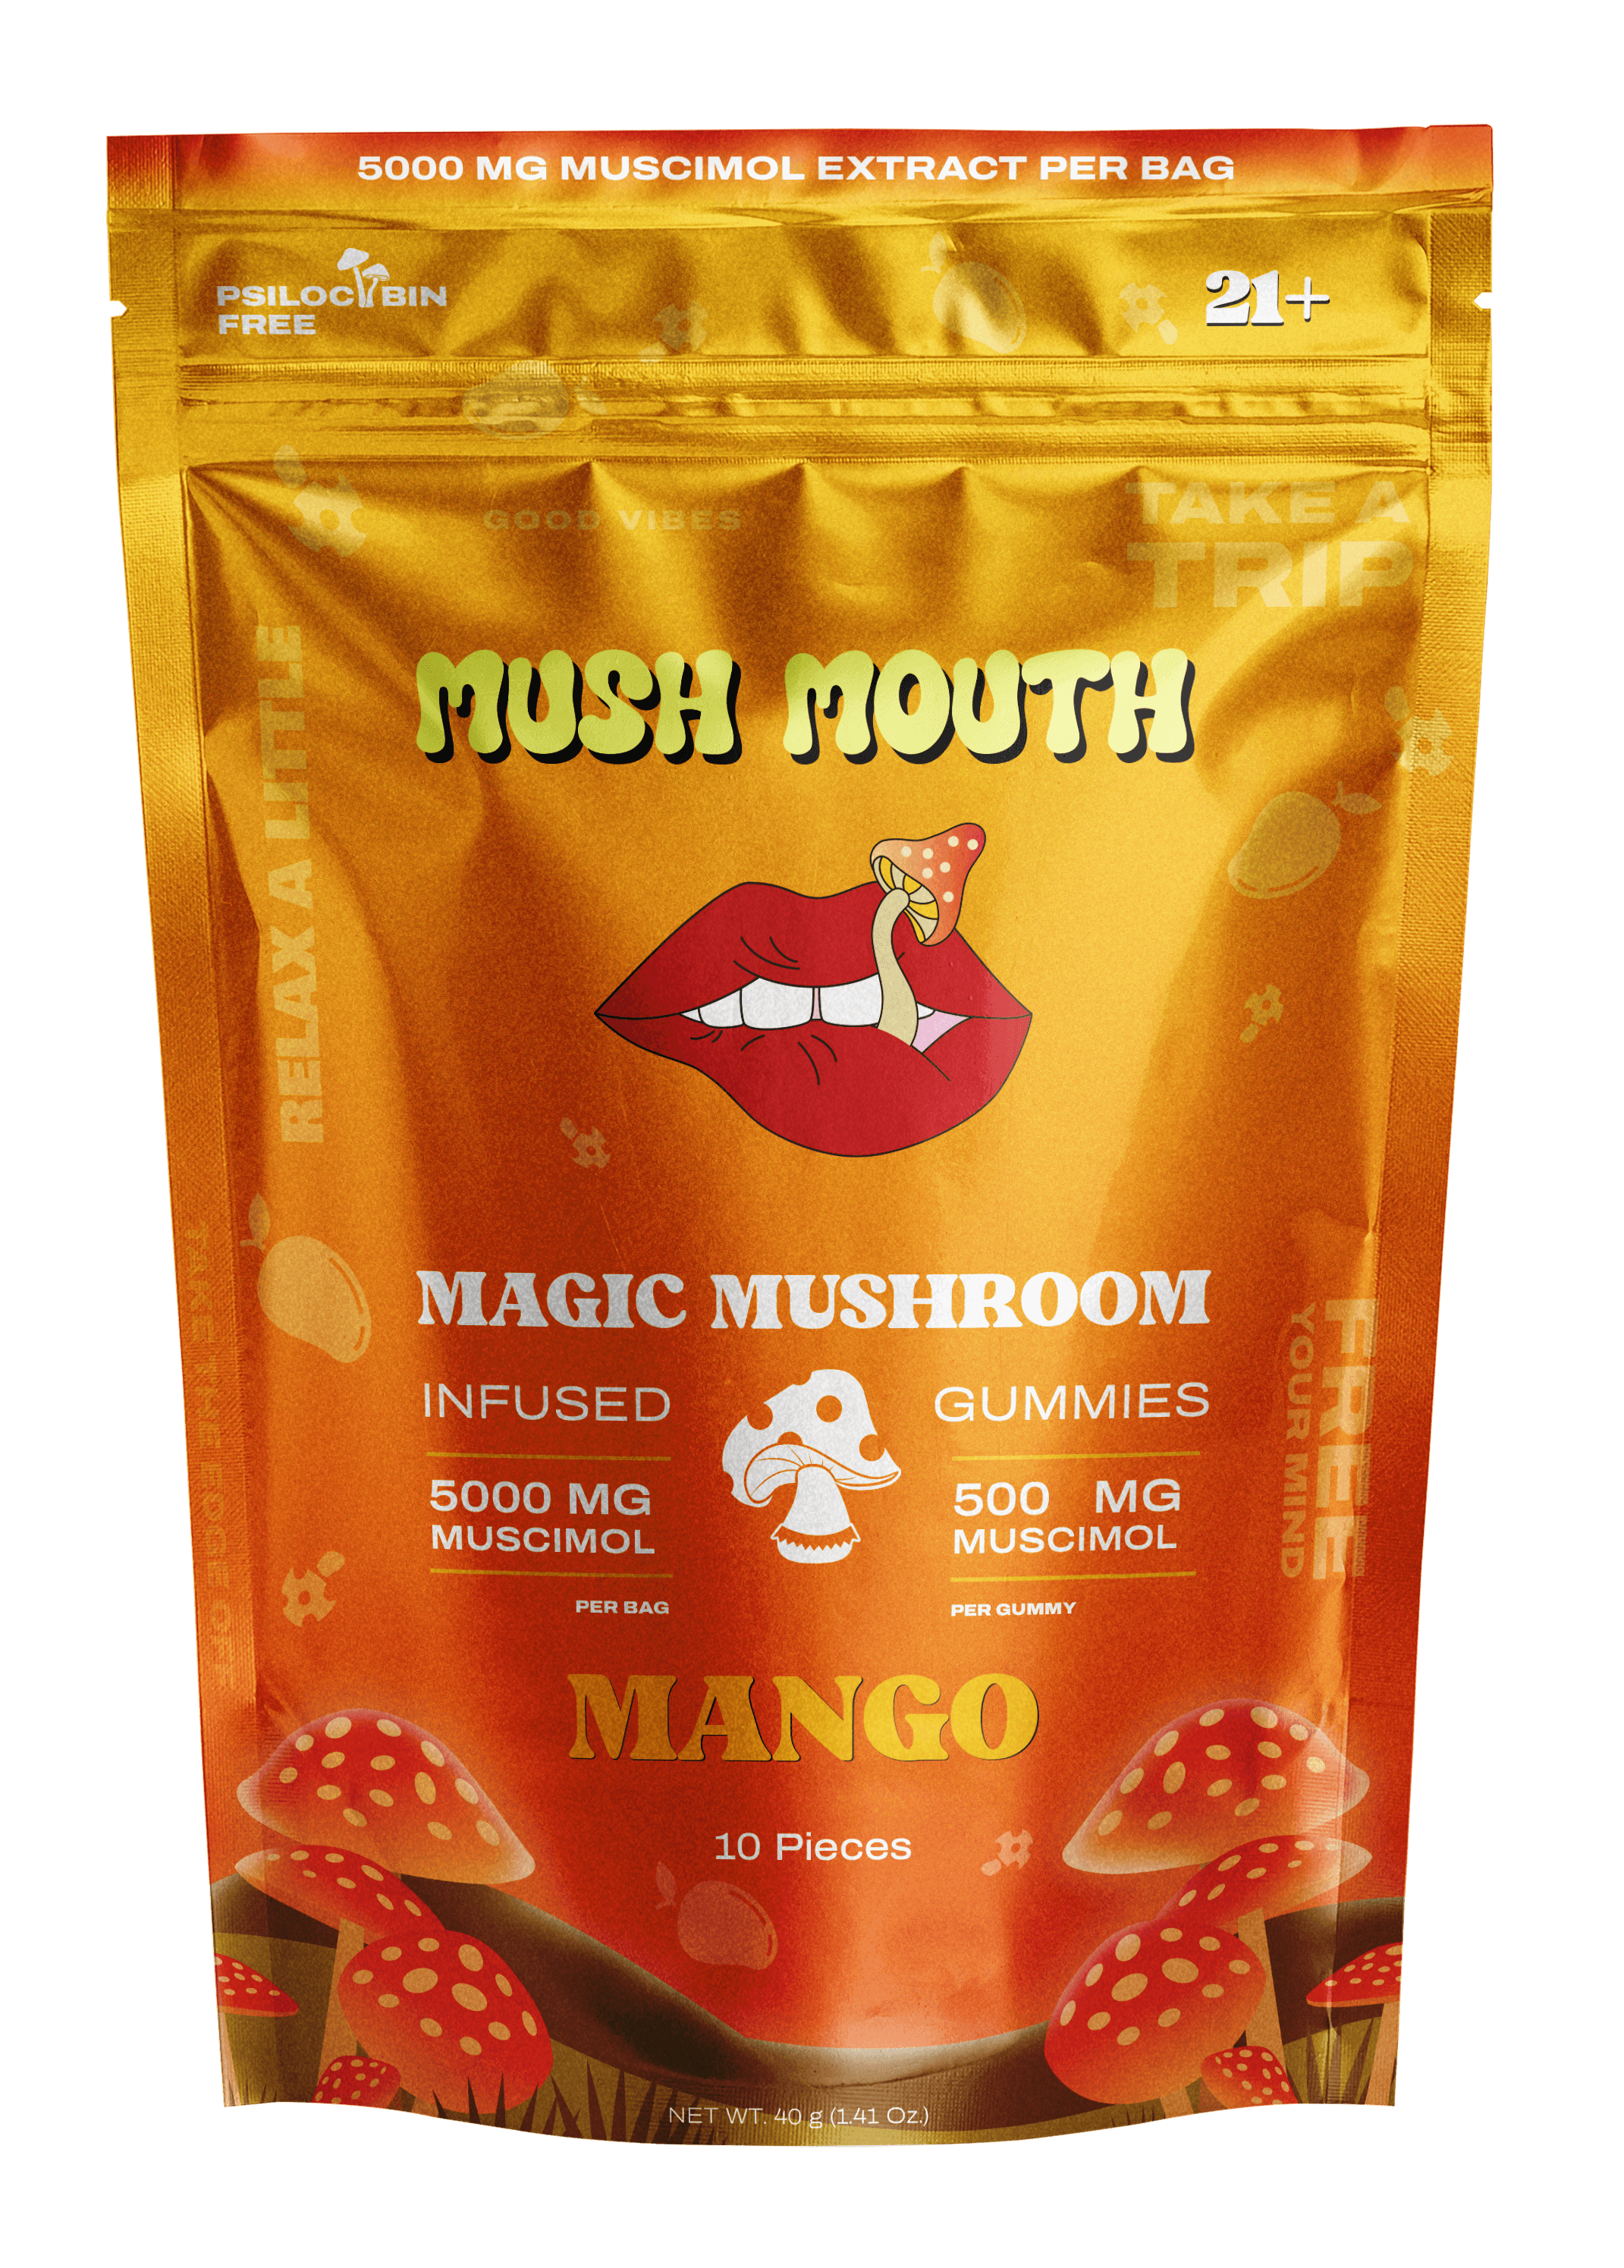 Amanita Muscaria Mushroom Gummies 5000mg - Mush Mouth